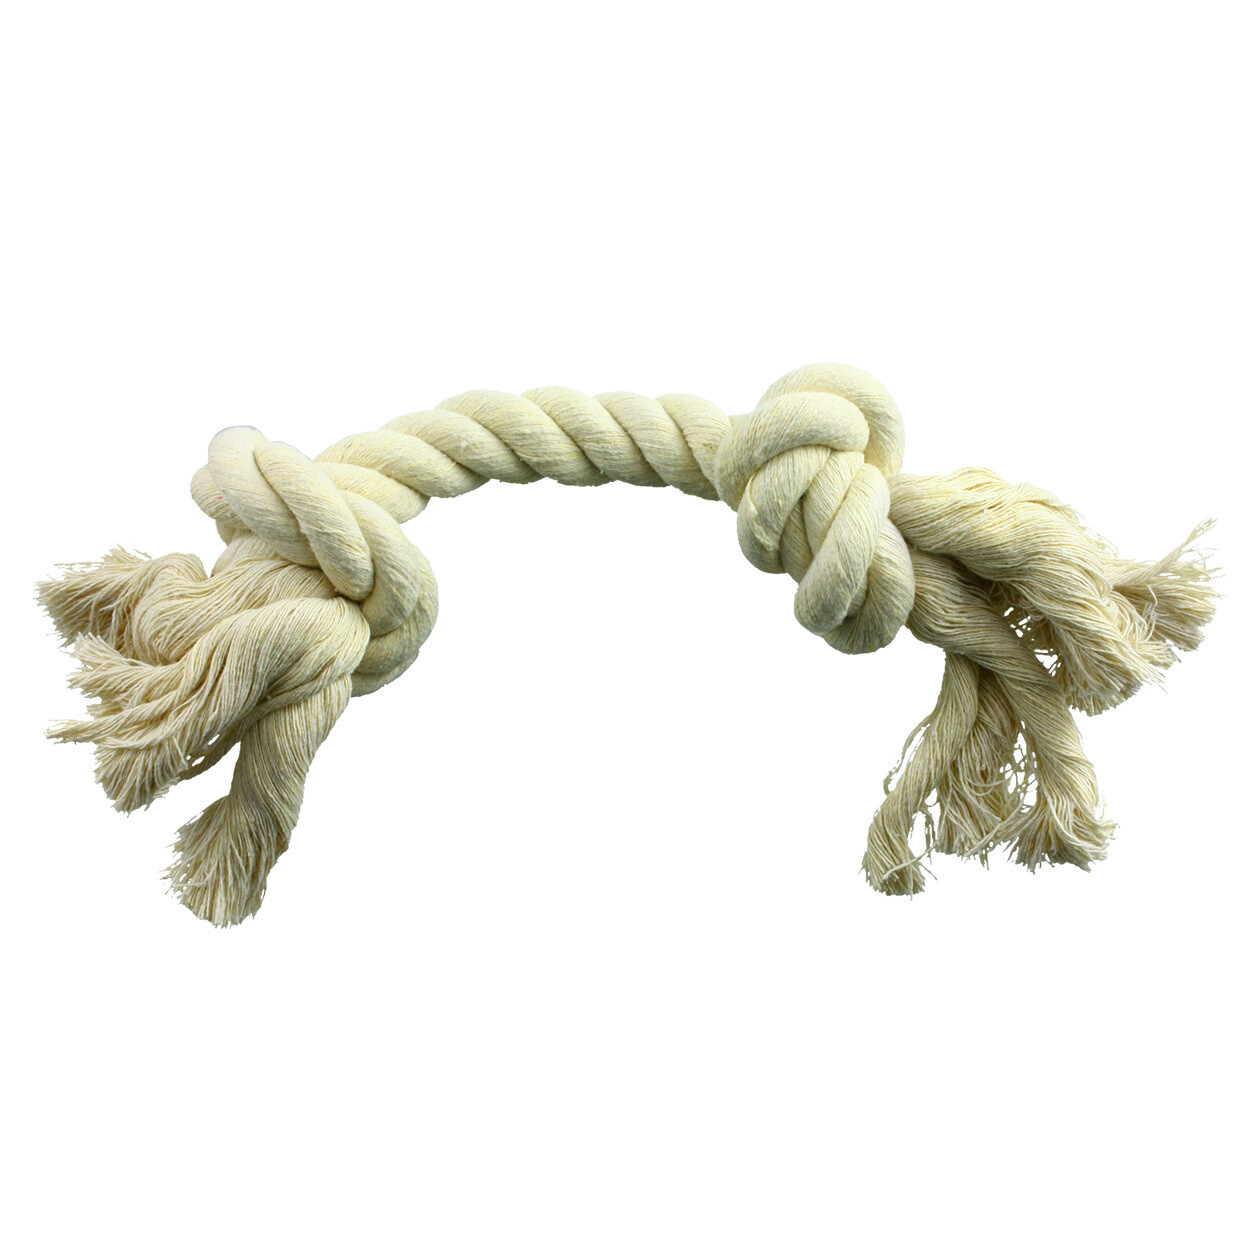 Animal Treasures 2 knot 12" Rope